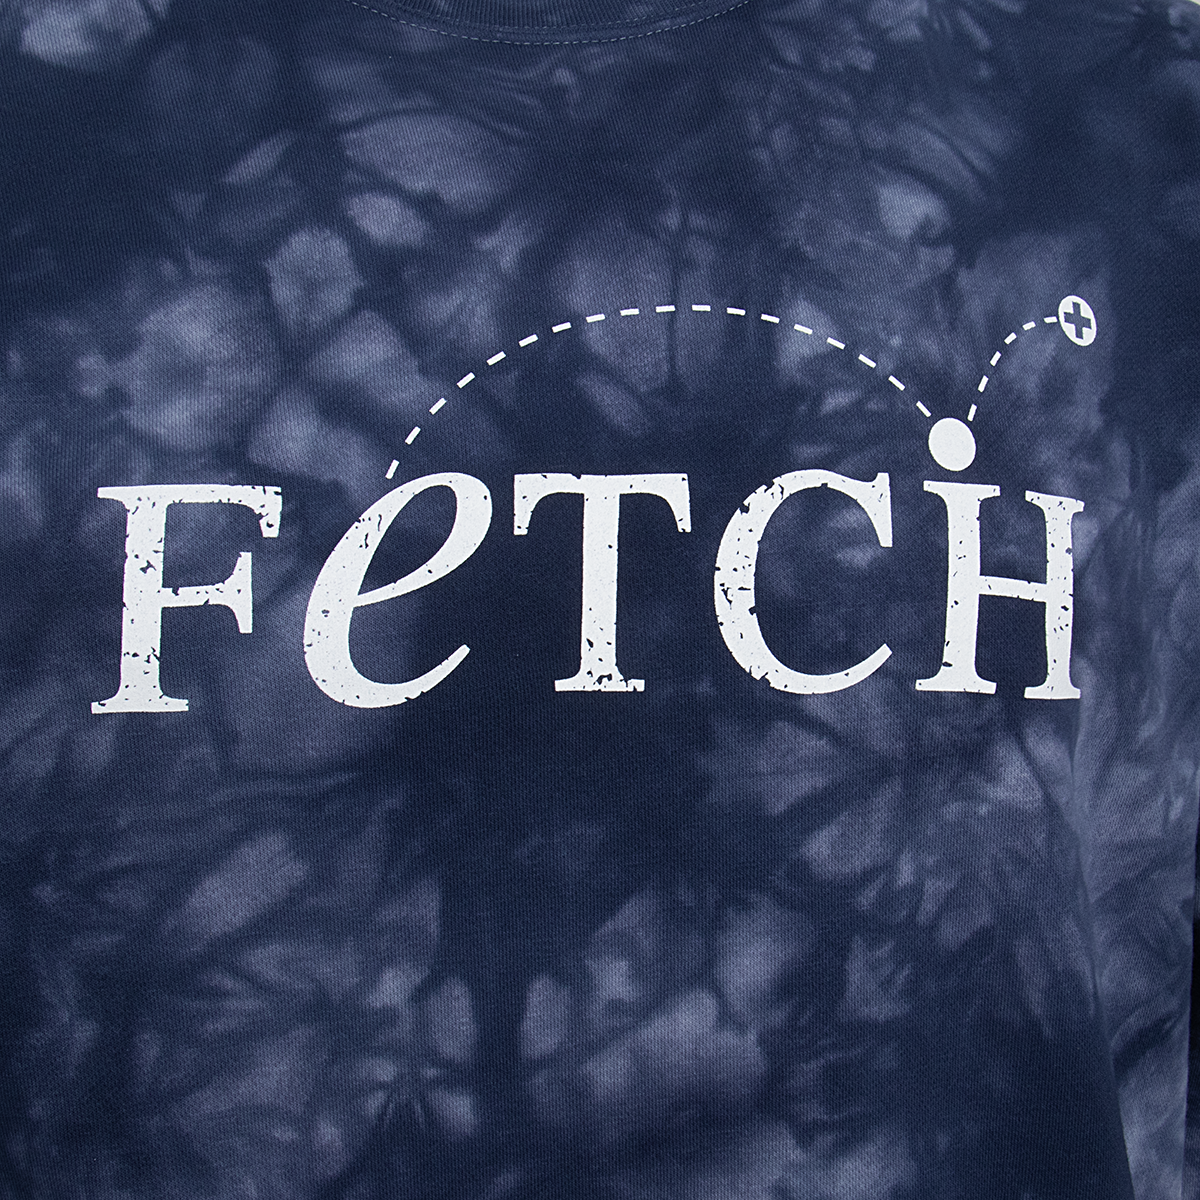 Fetch Tie-Dye Crewneck Unisex Sweatshirt